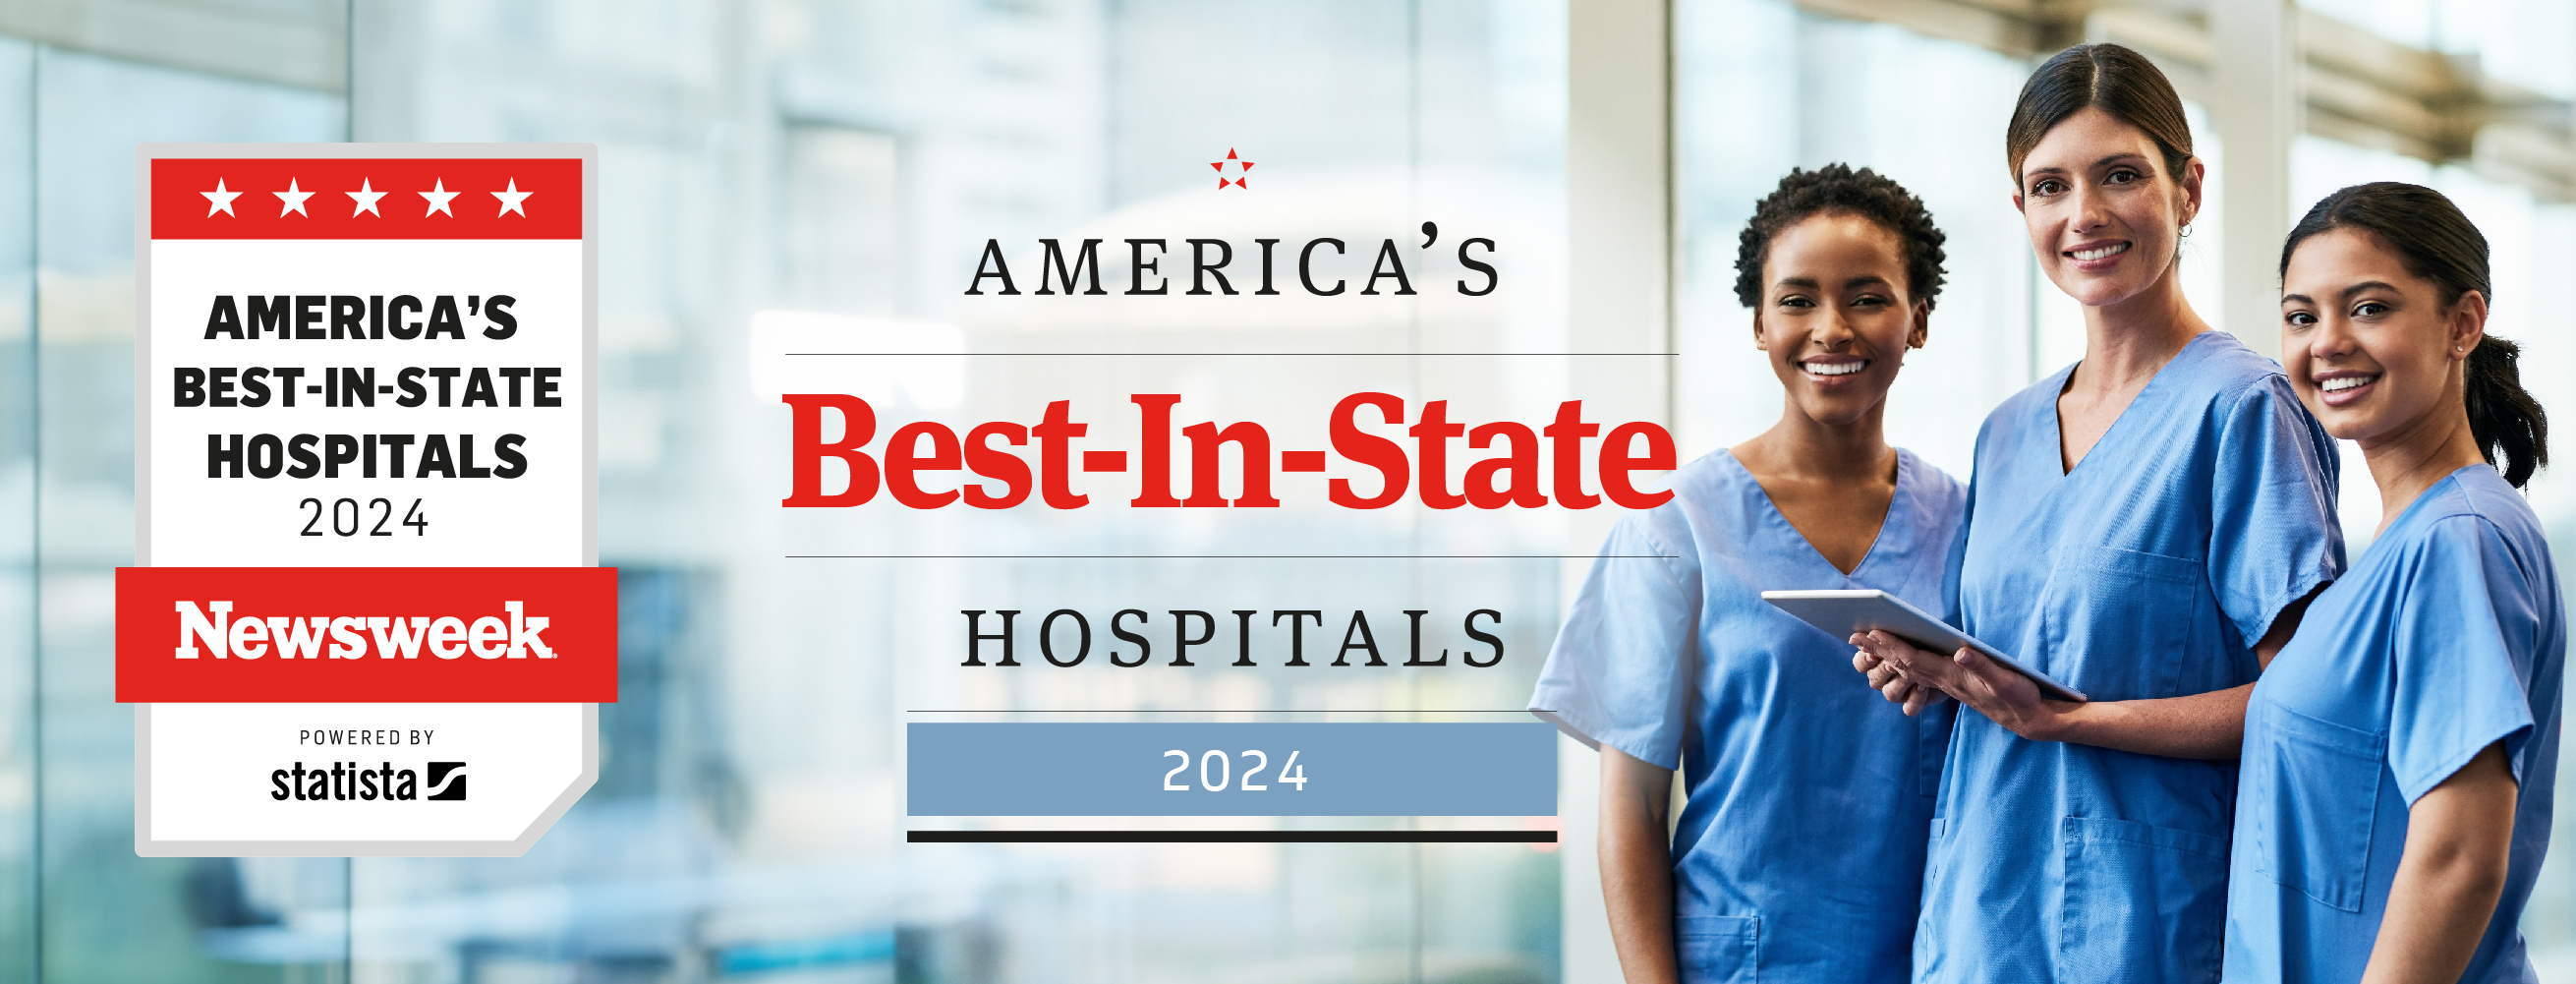 America's BestInState Hospitals 2024